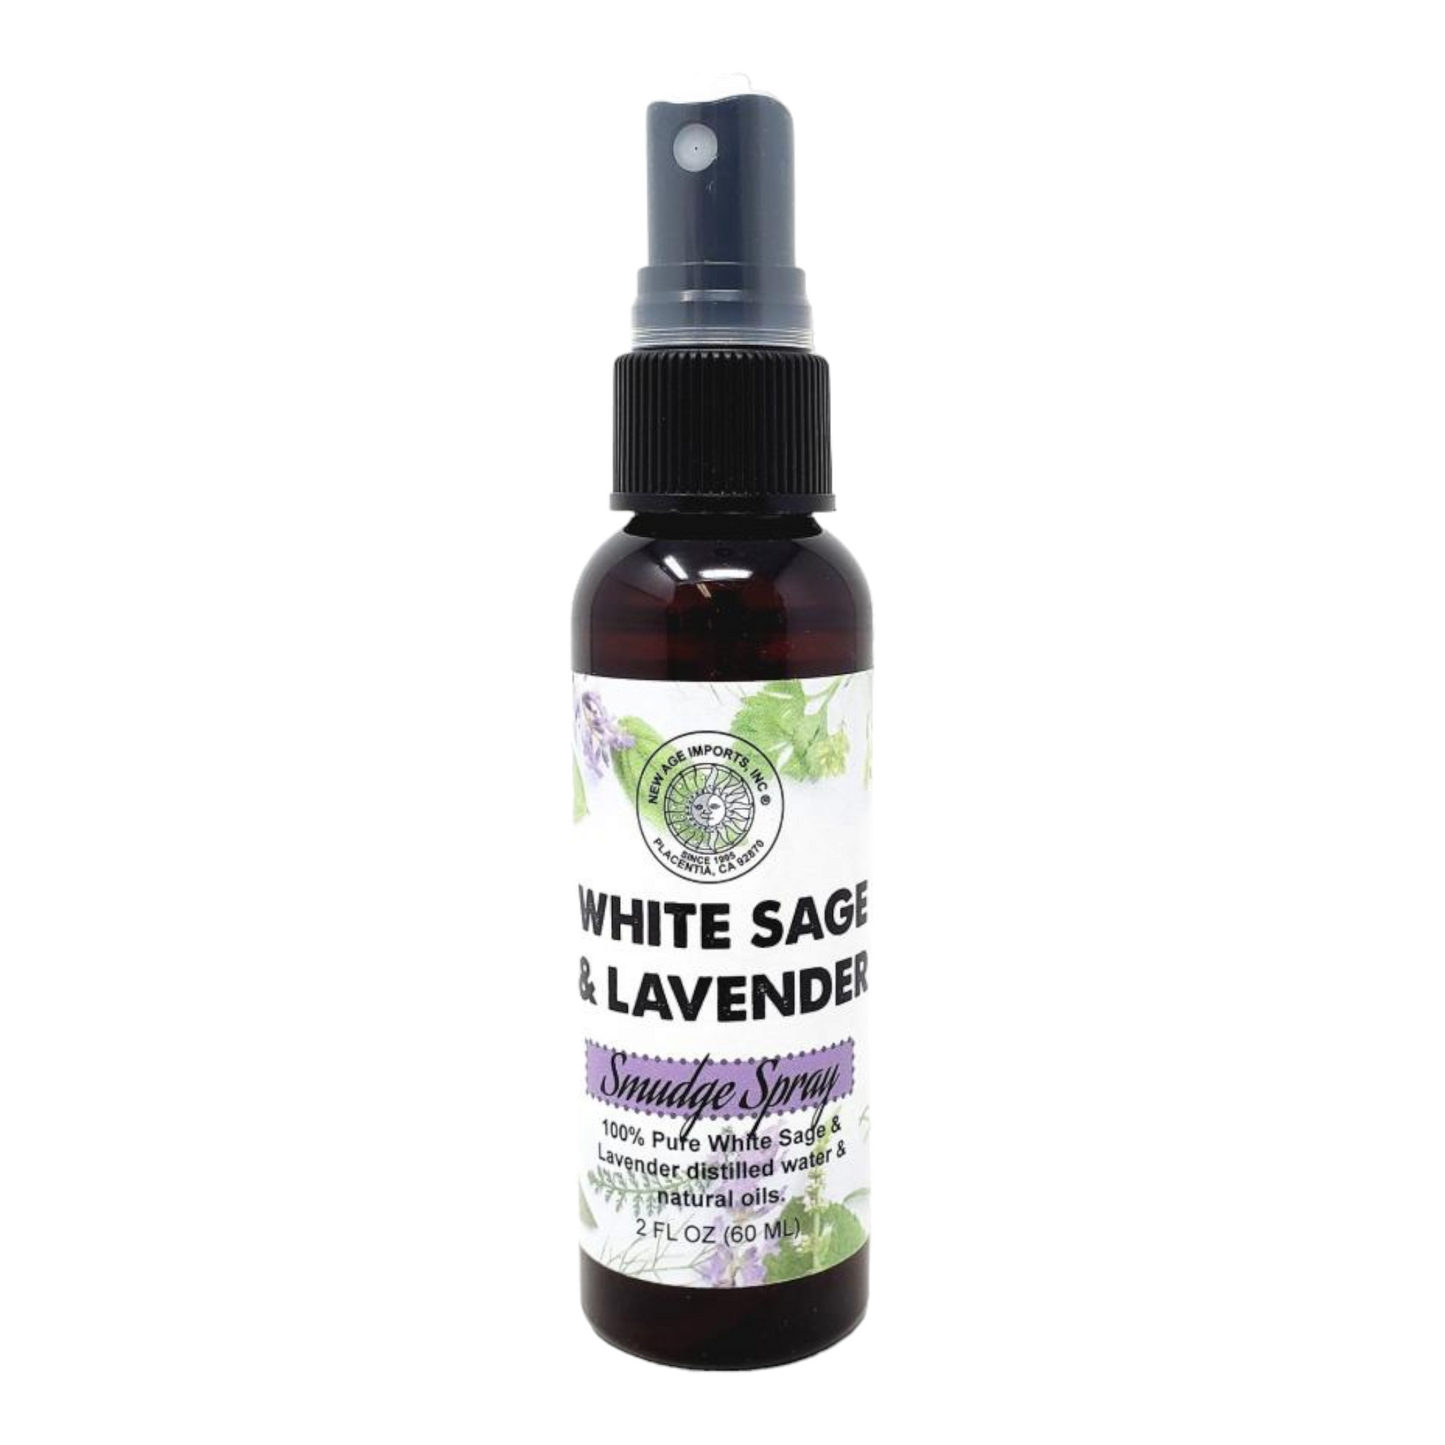 White Sage & Lavender Smudge Spray